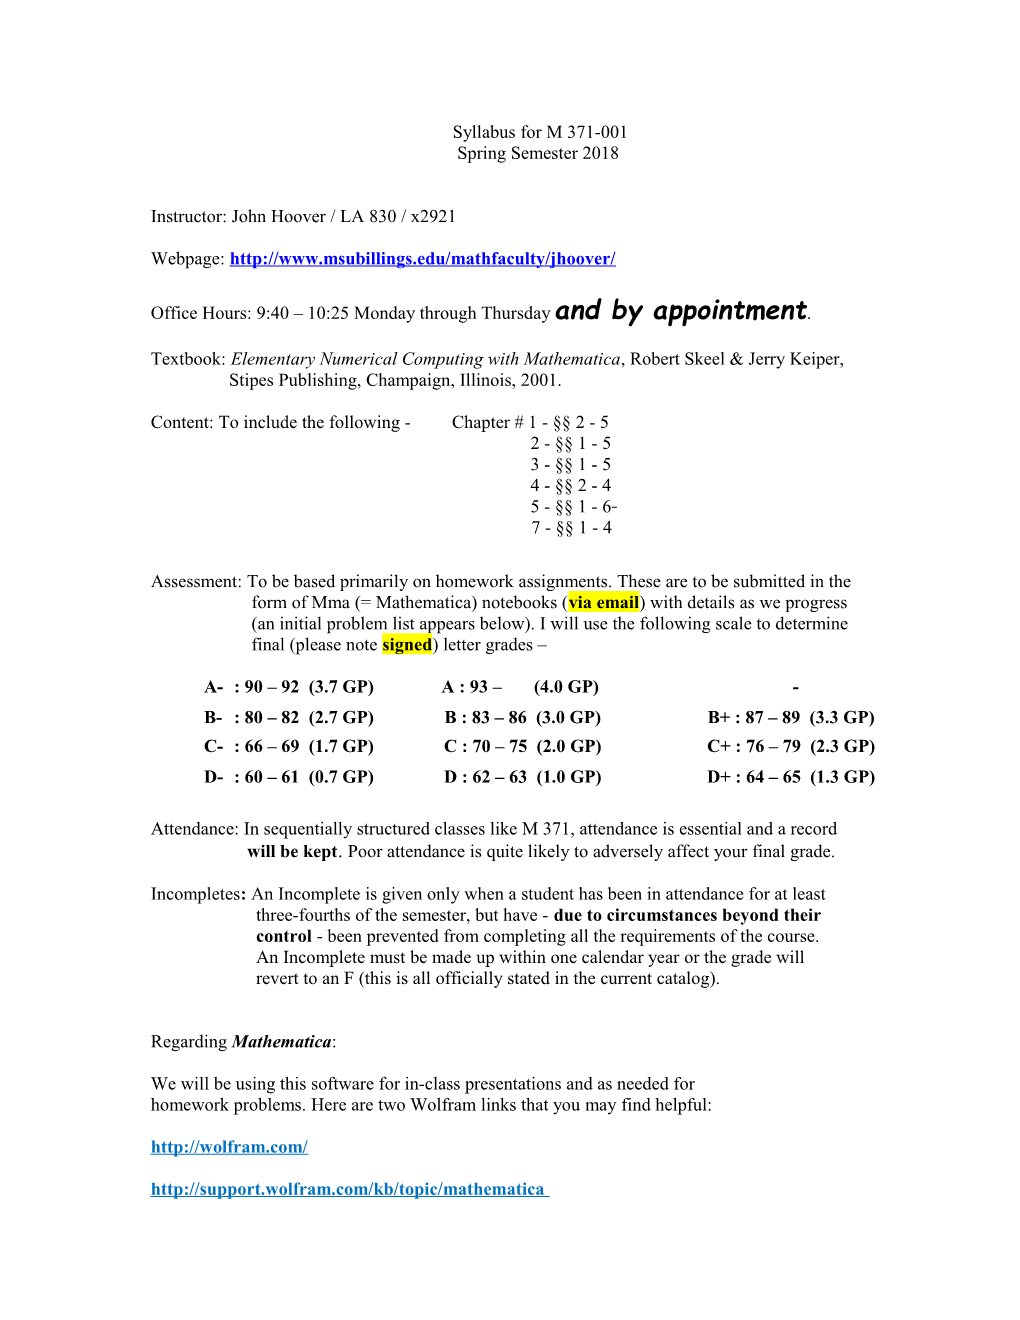 Syllabus for Math 371-01